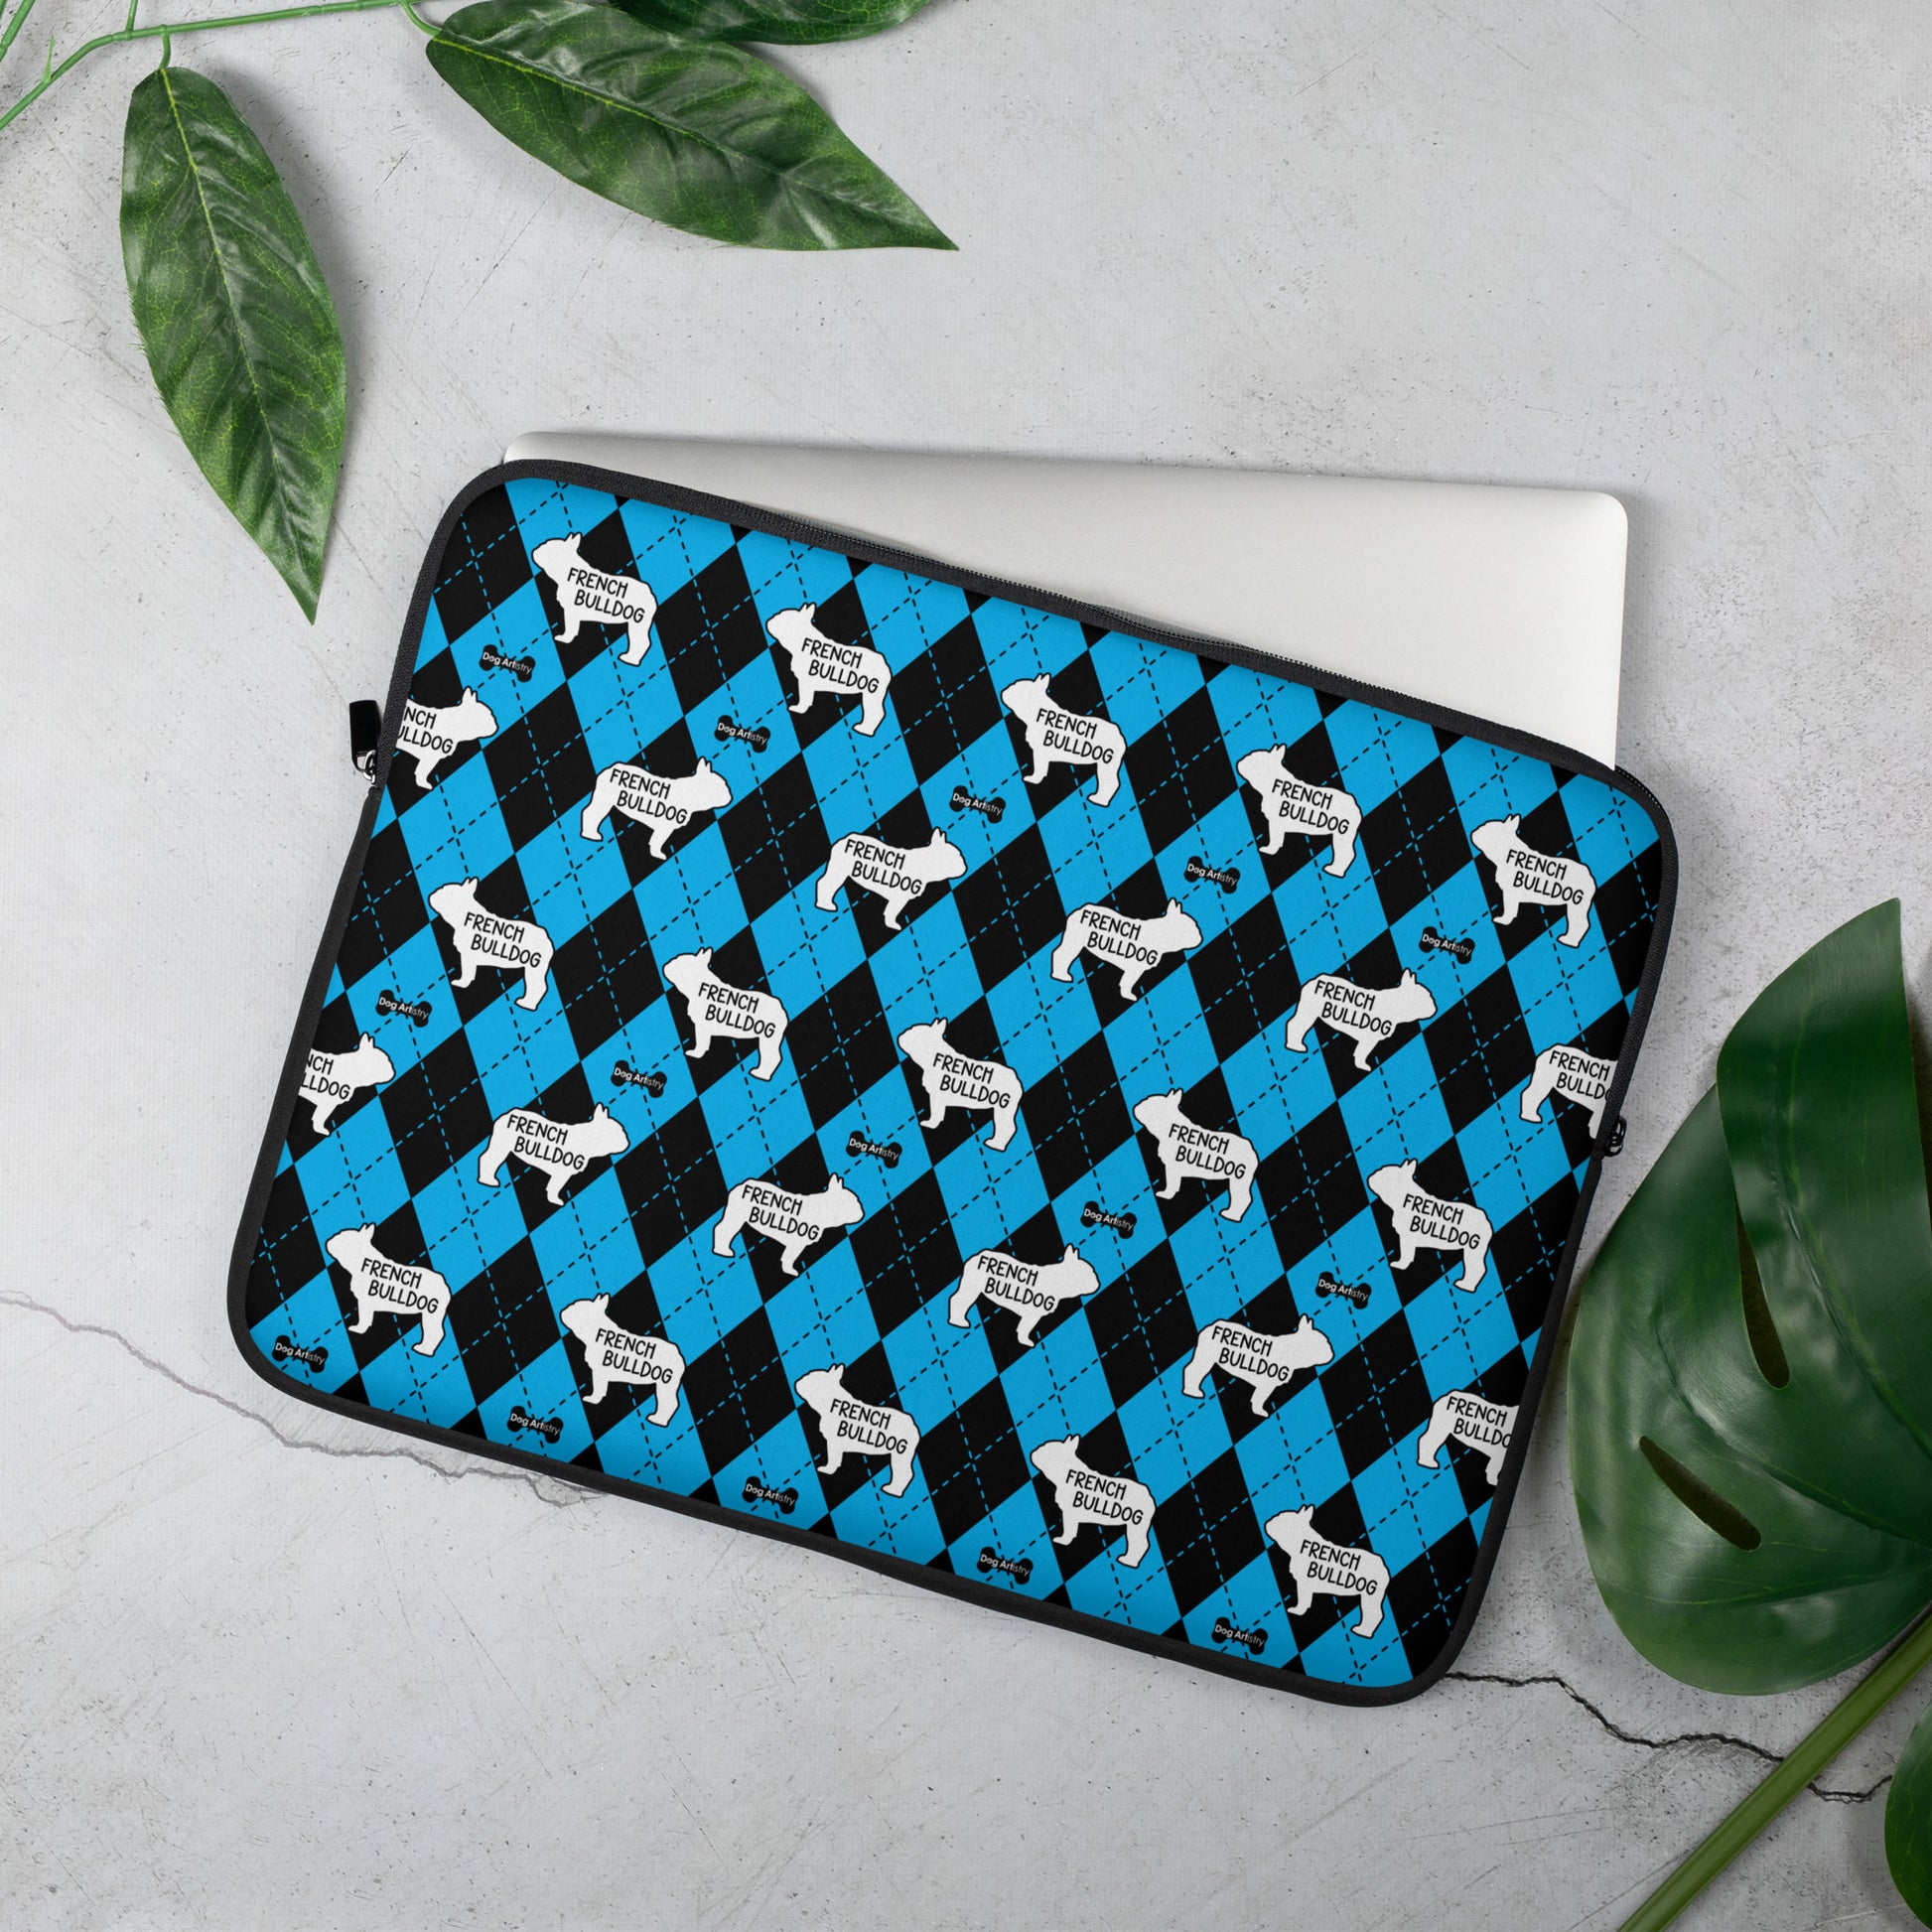 French Bulldog blue and black argyle laptop sleeve by Dog Artistry